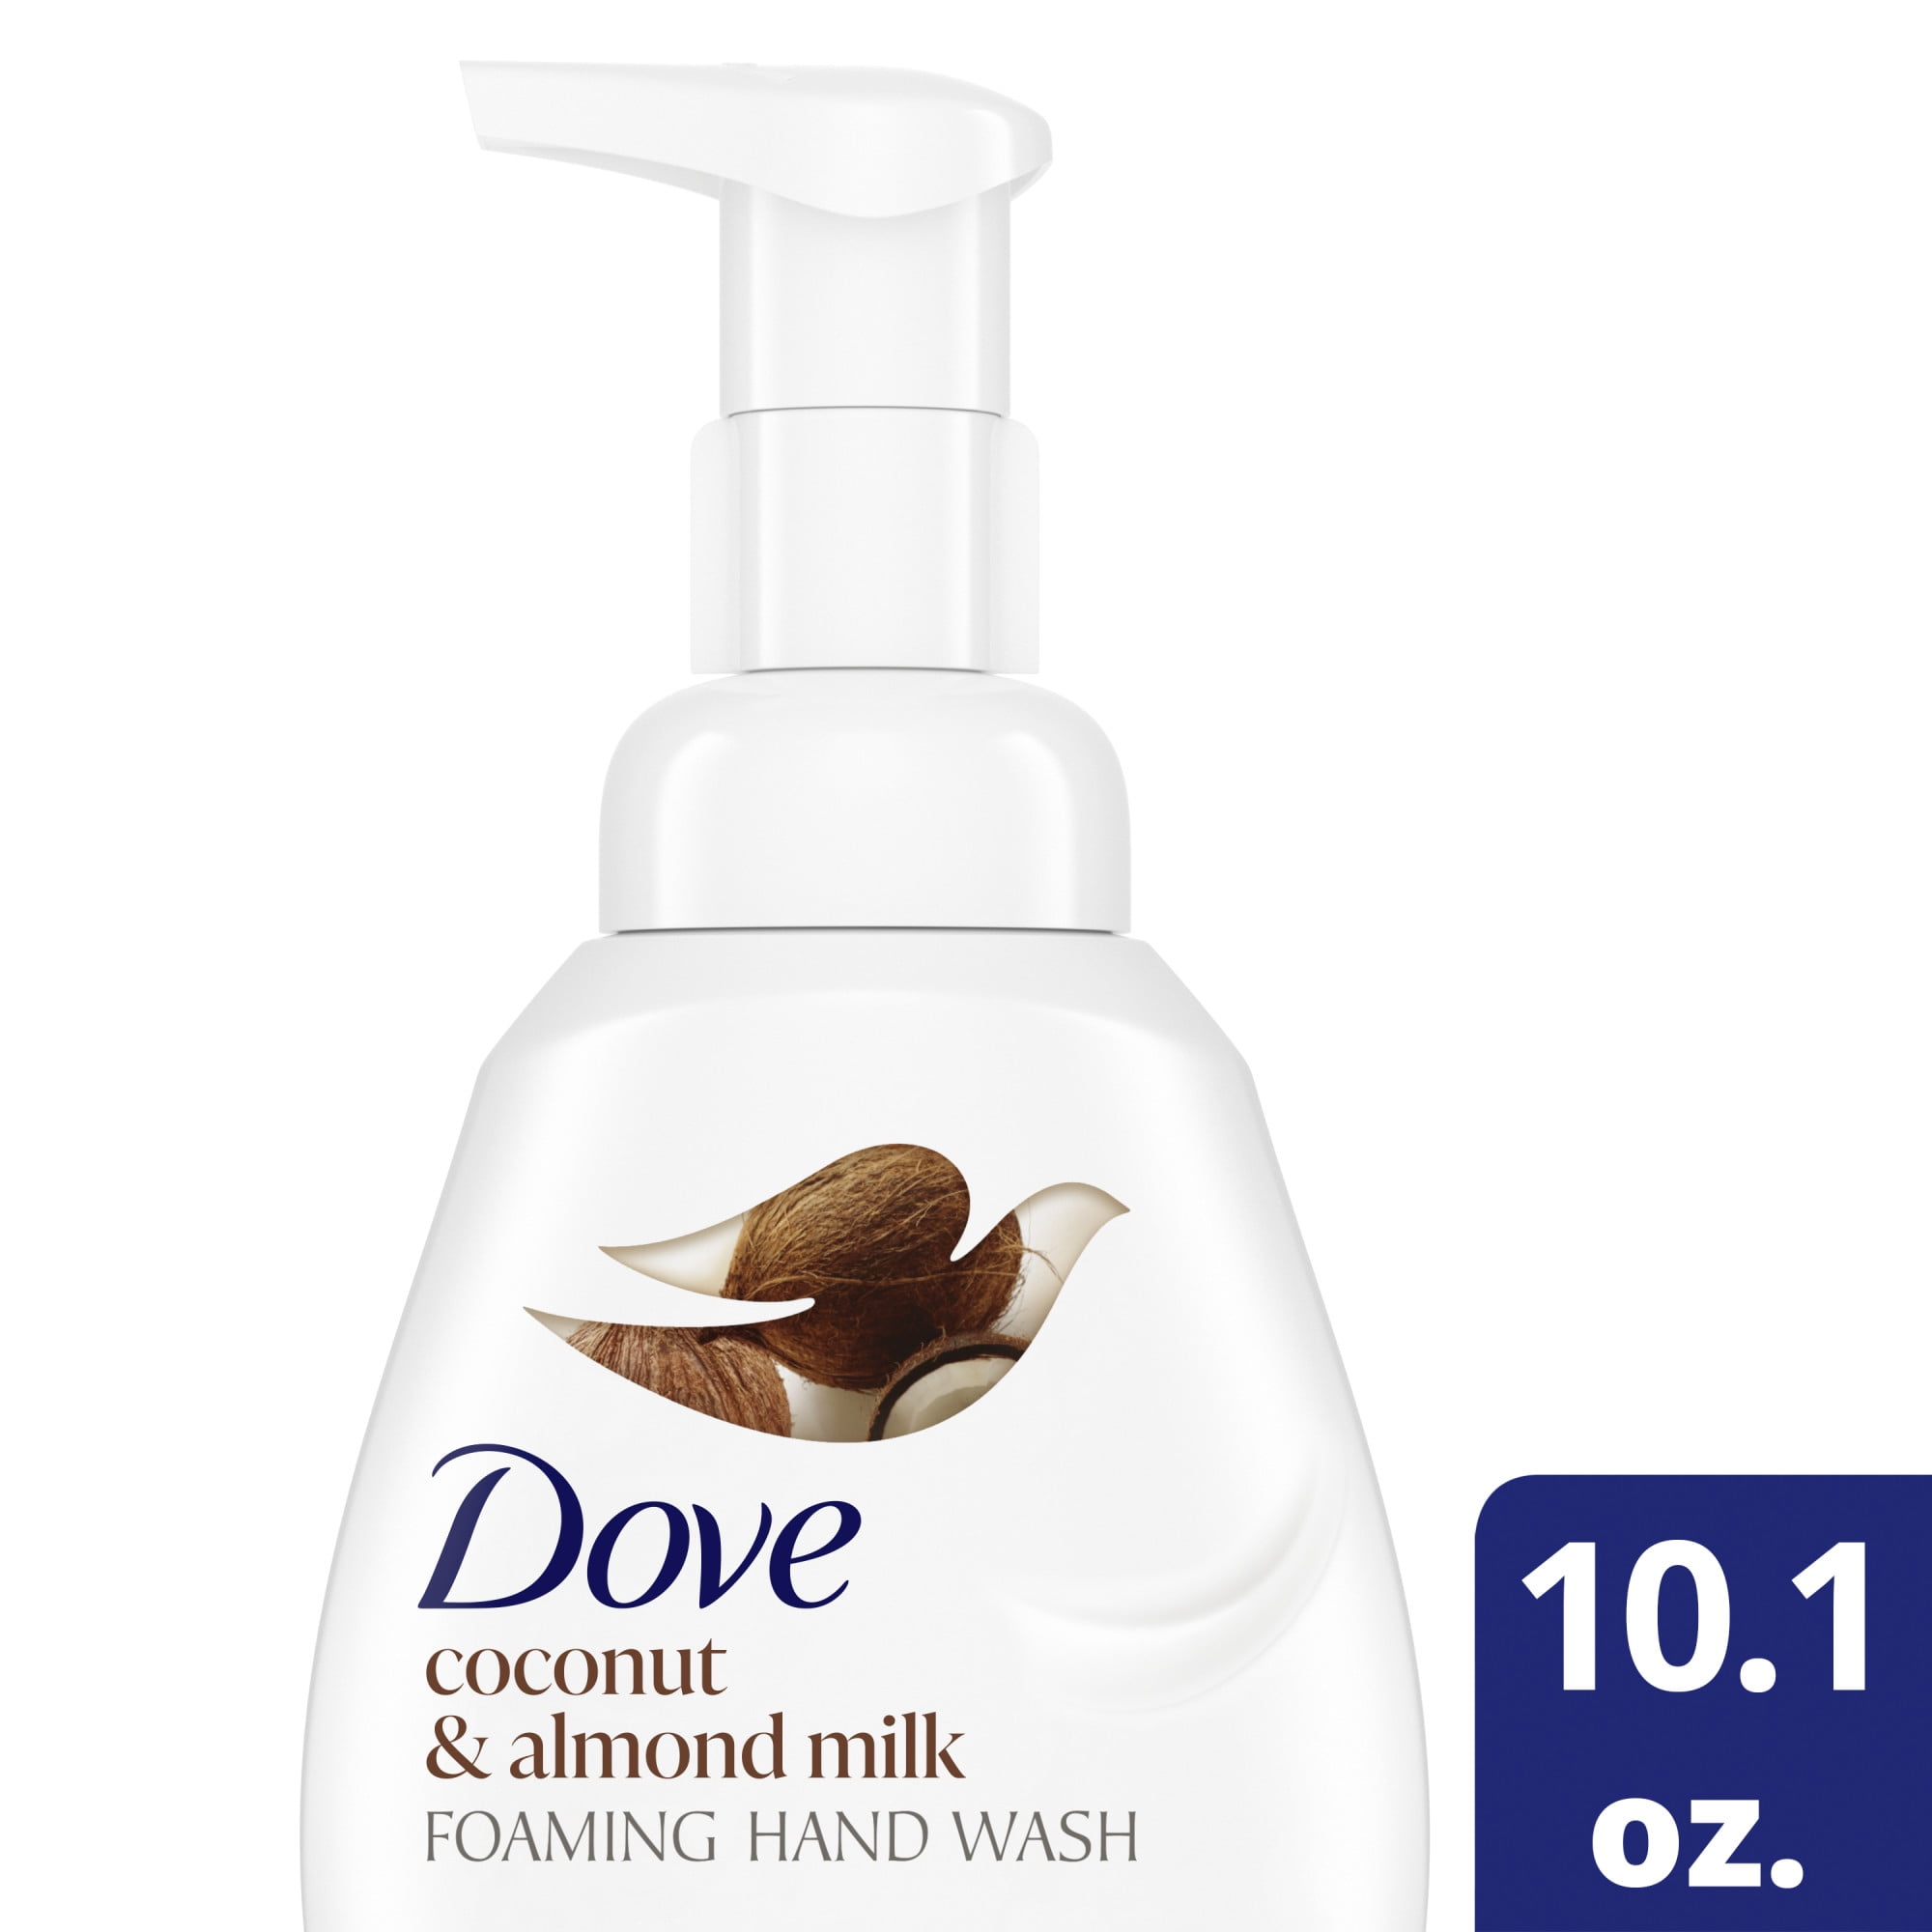 Boardwalk Foaming Hand Soap, Honey Almond Scent, 1 Gallon Bottle · Smith's  Janitorial Supply